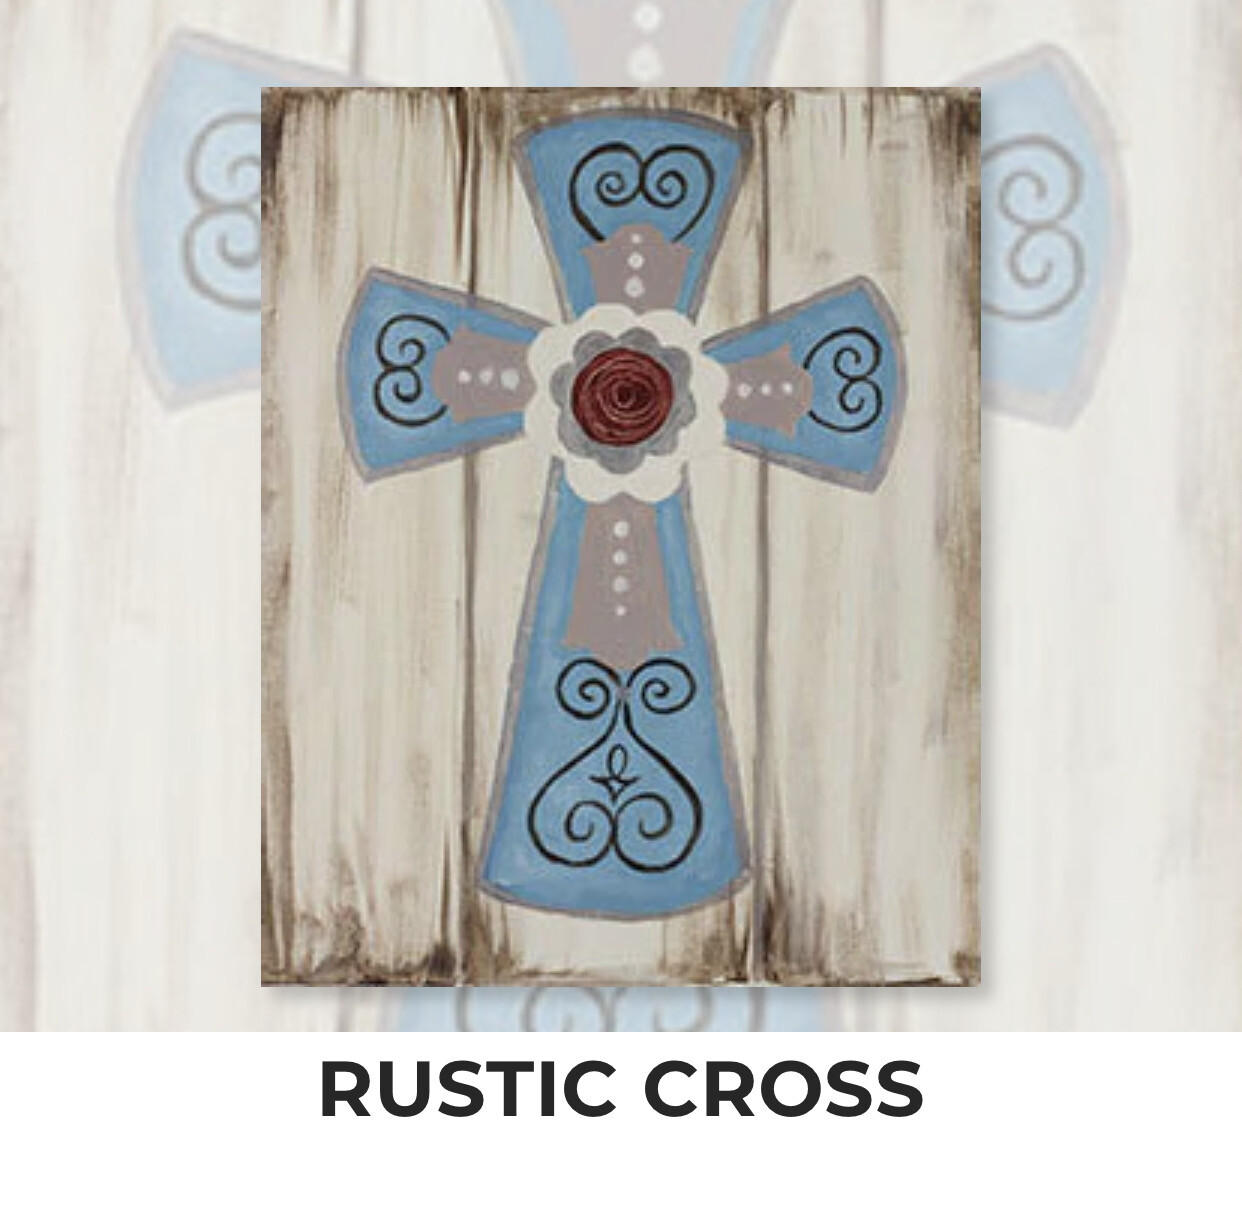 Rustic Cross ADULT Acrylic Paint On Canvas DIY Art Kit